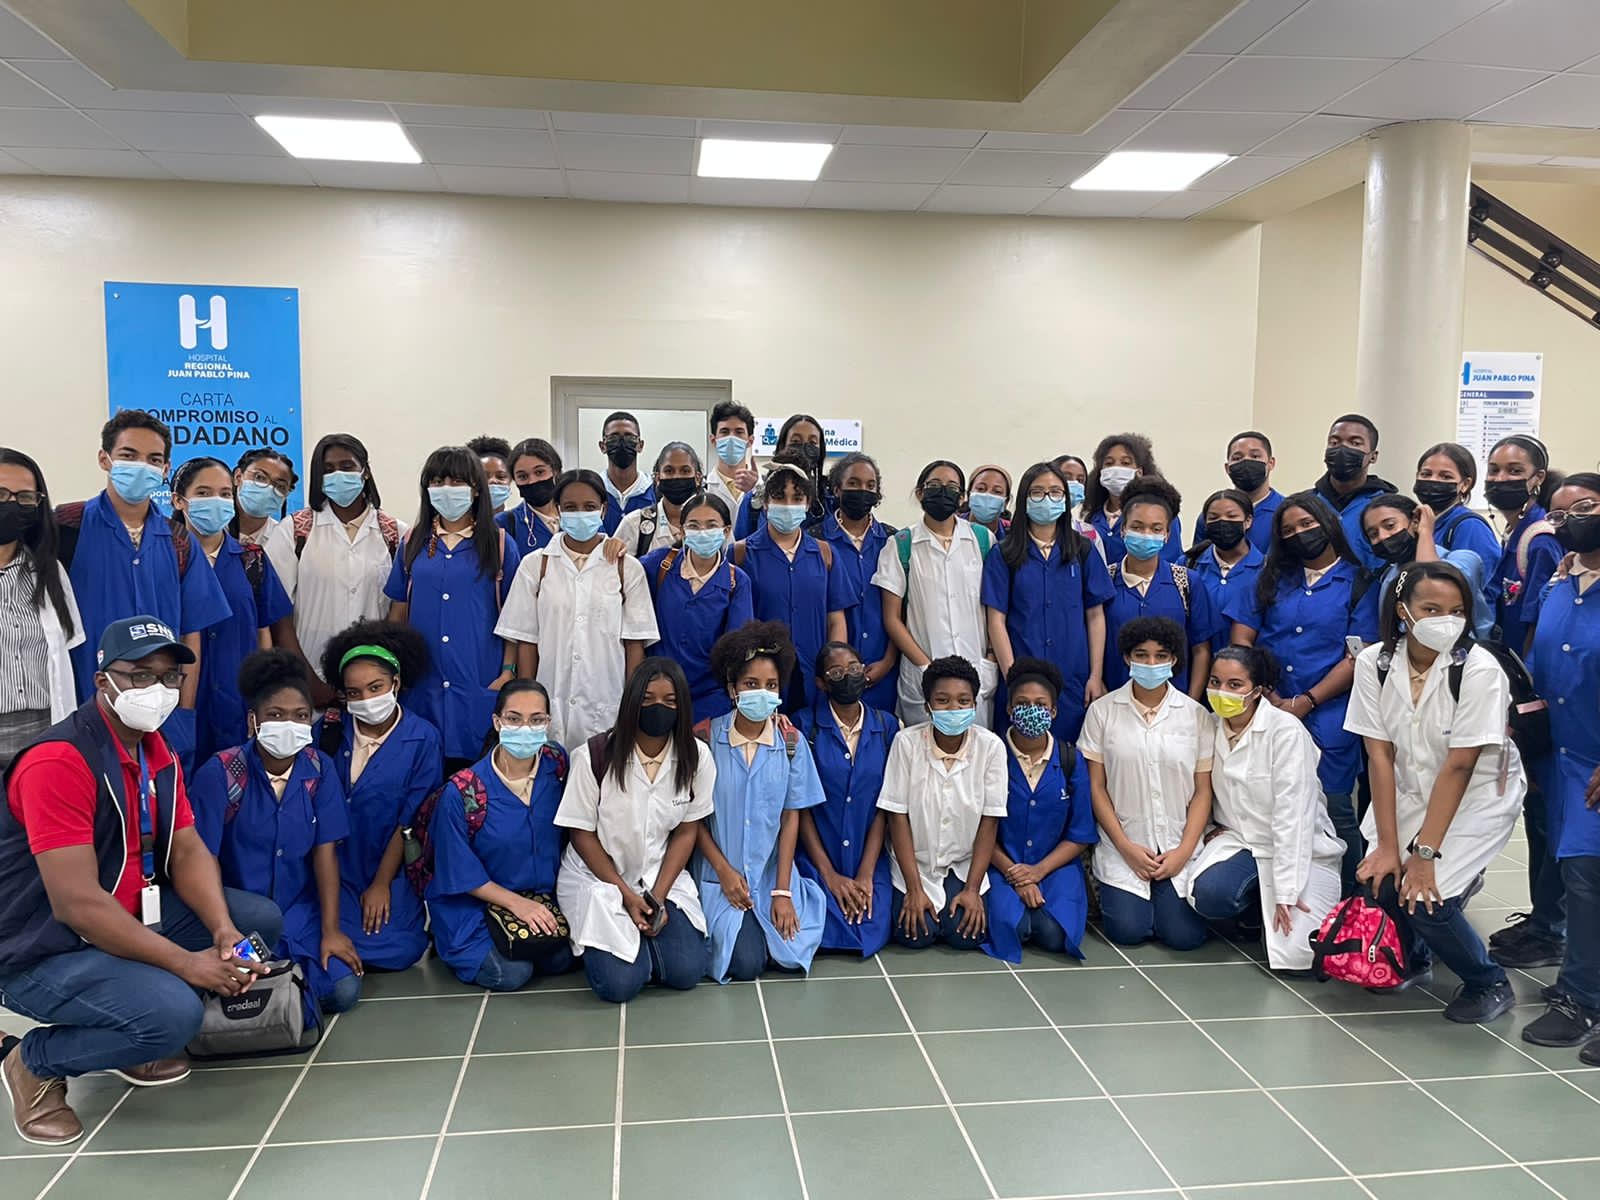 Estudiantes del Nivel Secundario visitan Hospital 